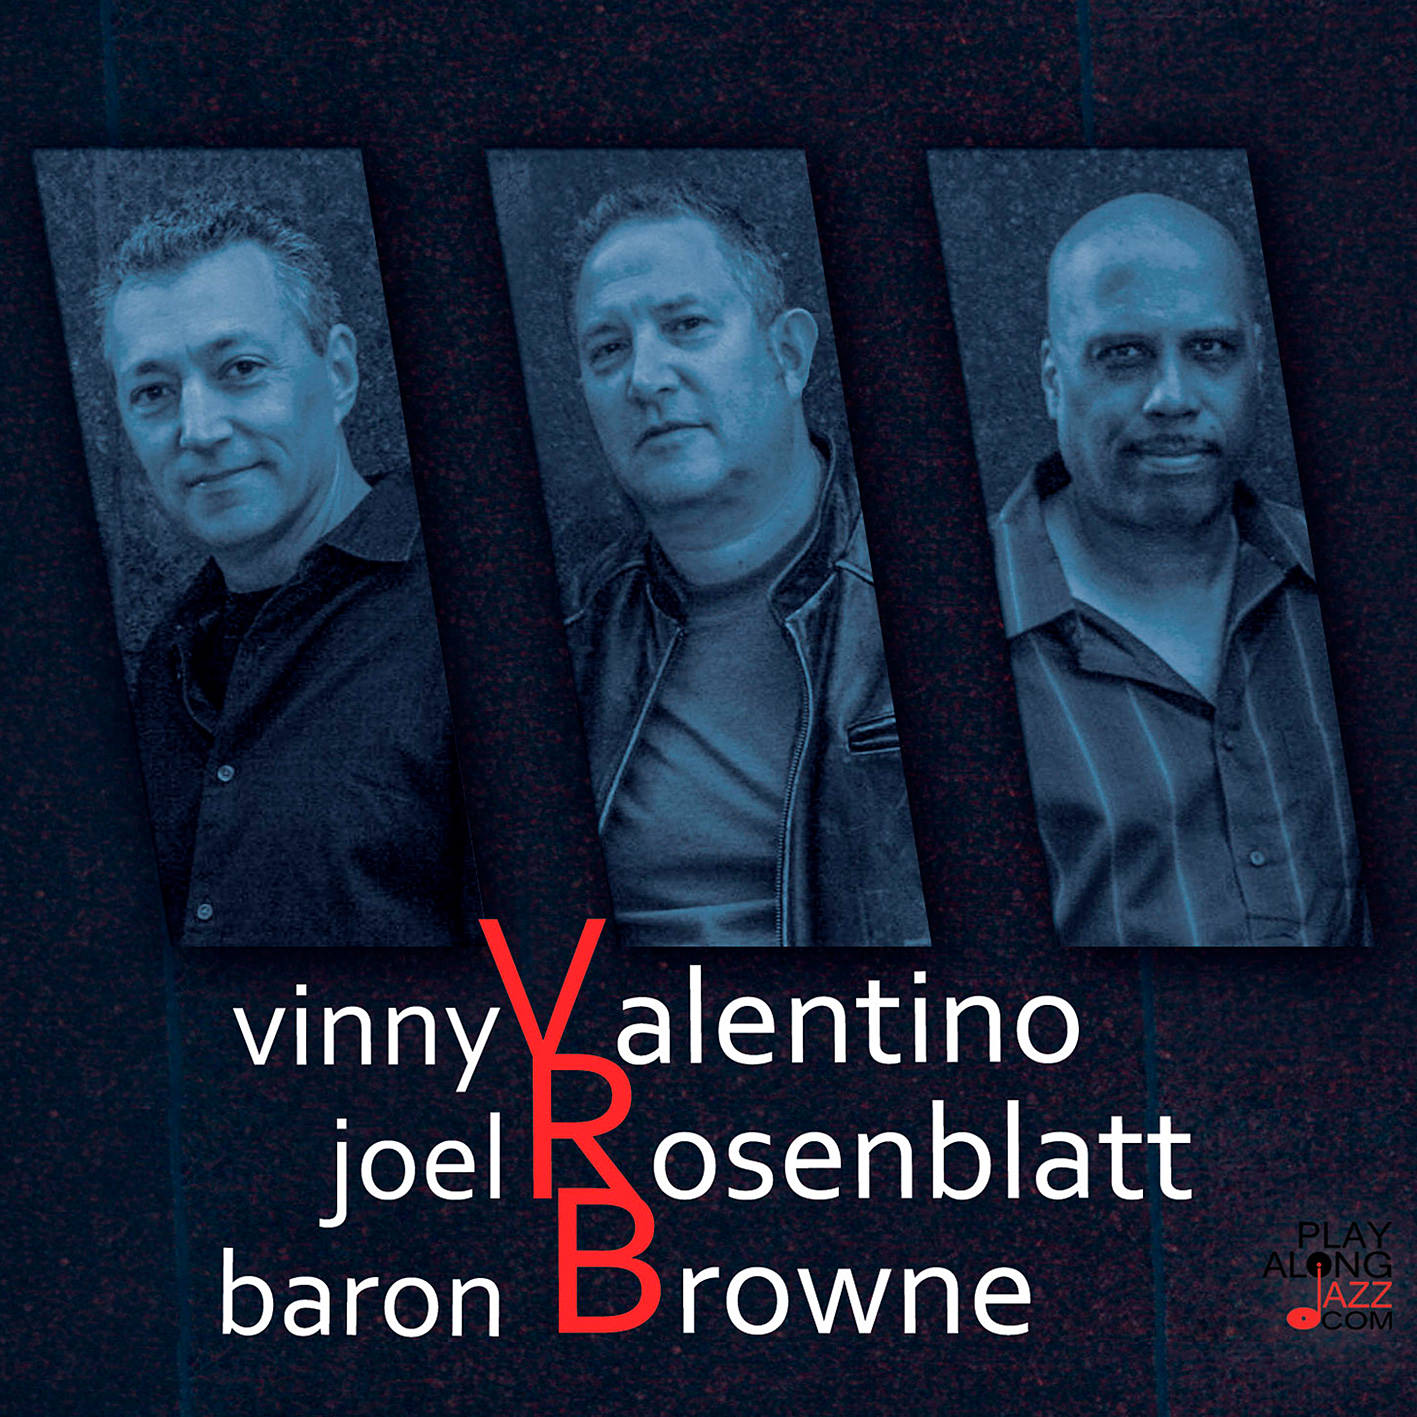 Vinny Valentino, Baron Browne, Joel Rosenblatt - VRB (2018) [HDTracks FLAC 24bit/96kHz]